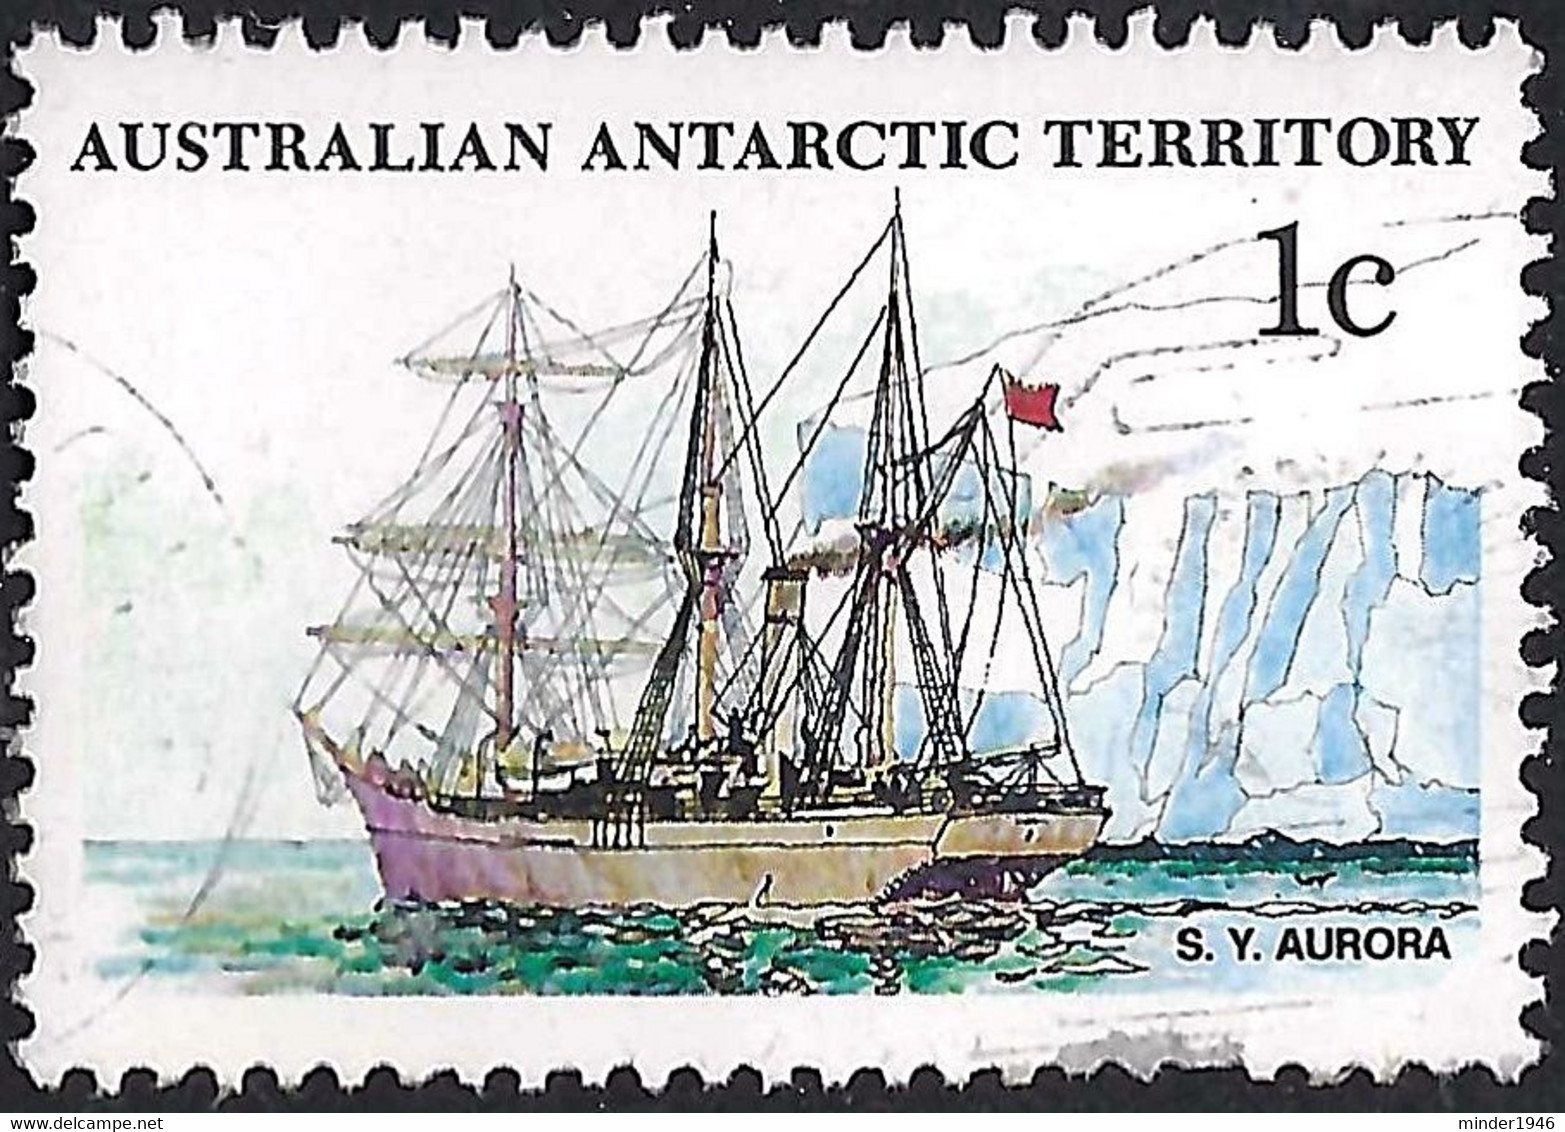 AUSTRALIAN ANTARCTIC TERRITORY (AAT) 1979 QEII 1c Multicoloured 'Ships, S.Y. Aurora SG37 FU - Used Stamps